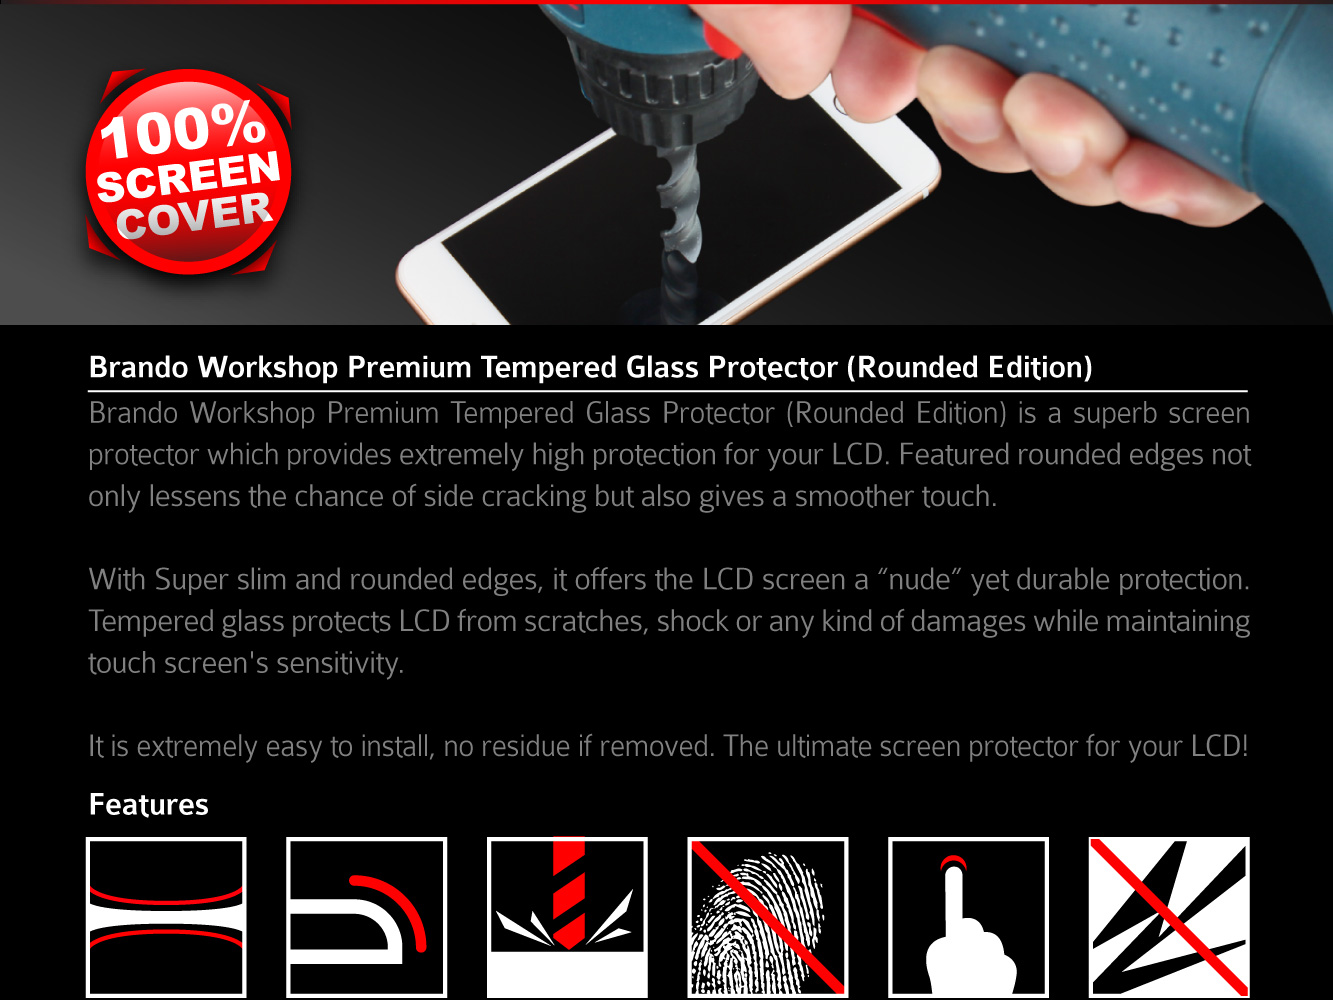 Brando Workshop Full Screen Coverage Glass Protector (Samsung Galaxy S6) - White